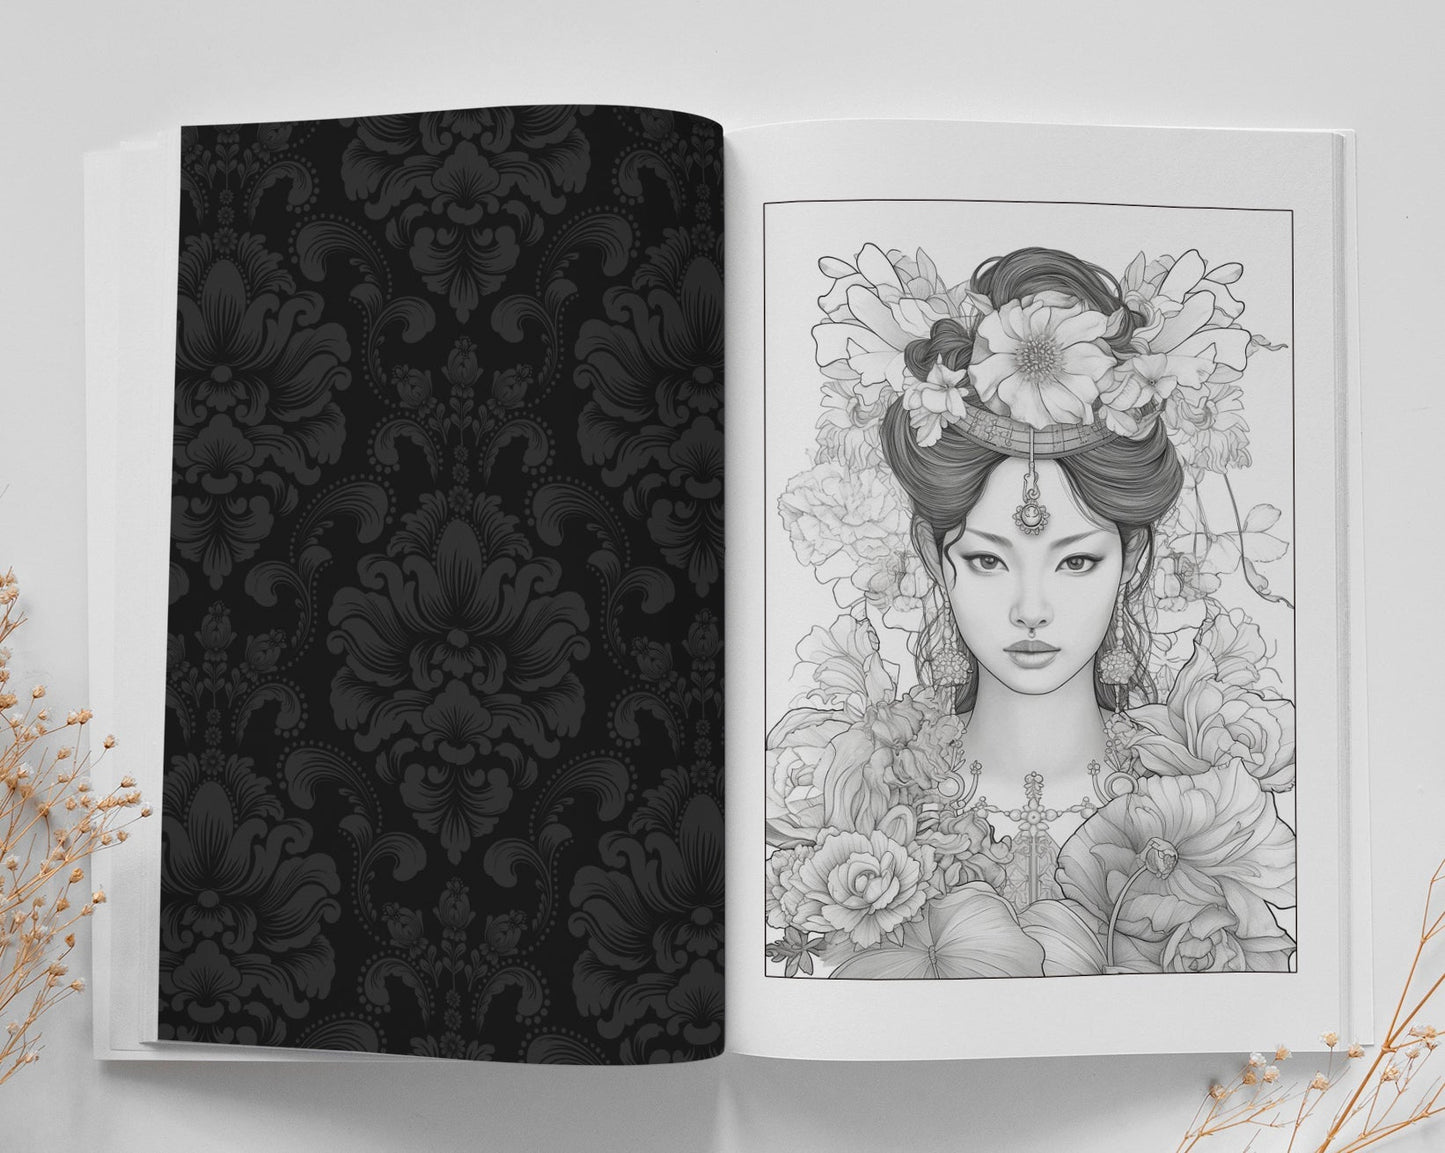 Traditional Thai Women Coloring Book (Digital) - Monsoon Publishing USA